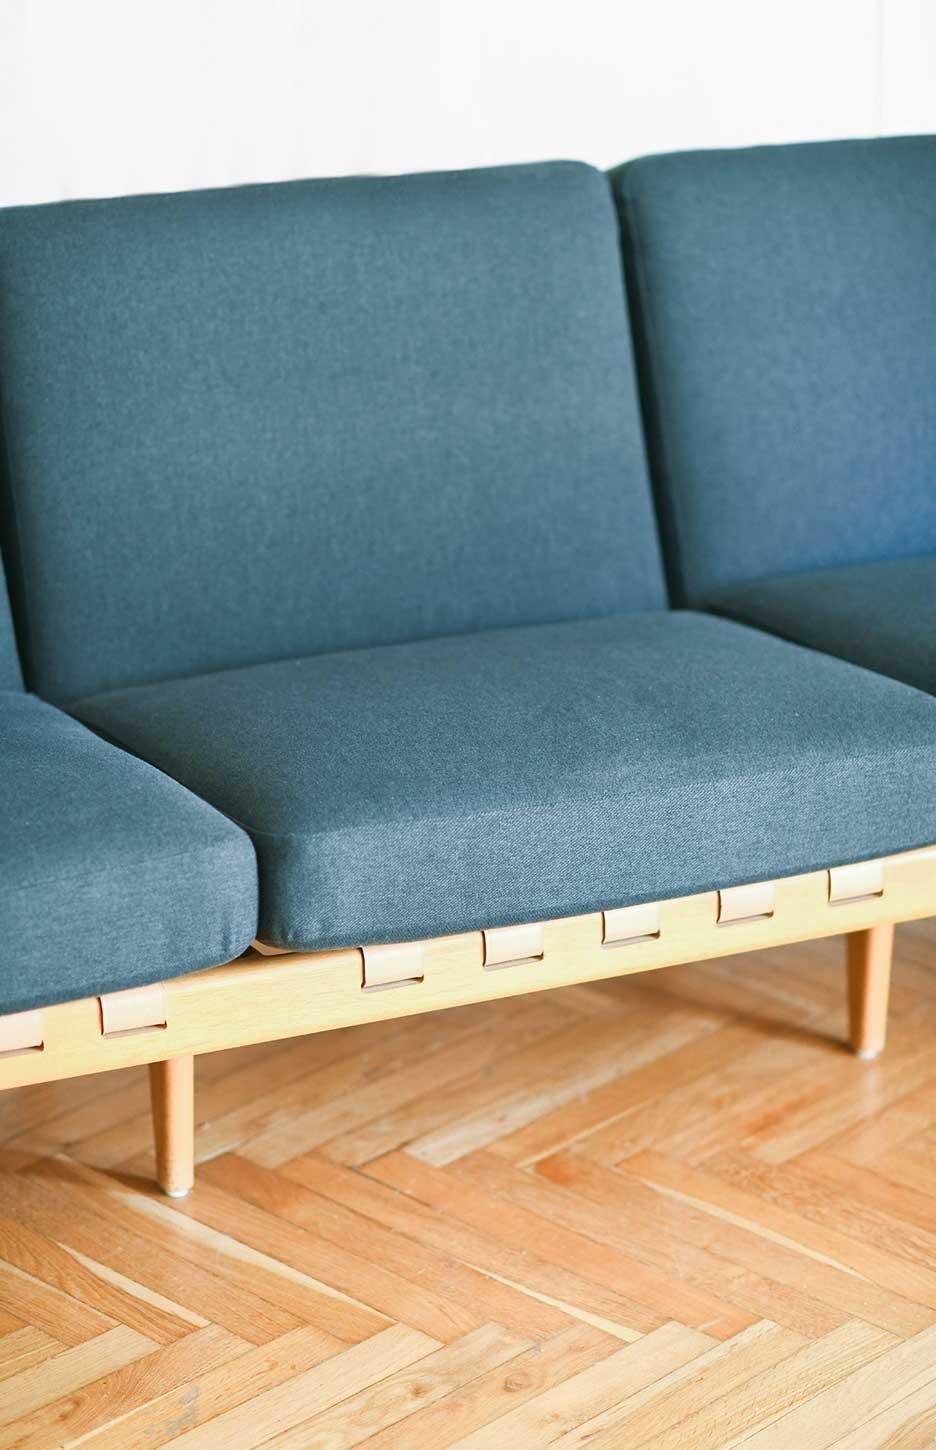 Textile Svante Skogh 1957 “Bodo” Sofa in Swedish Oak For Sale